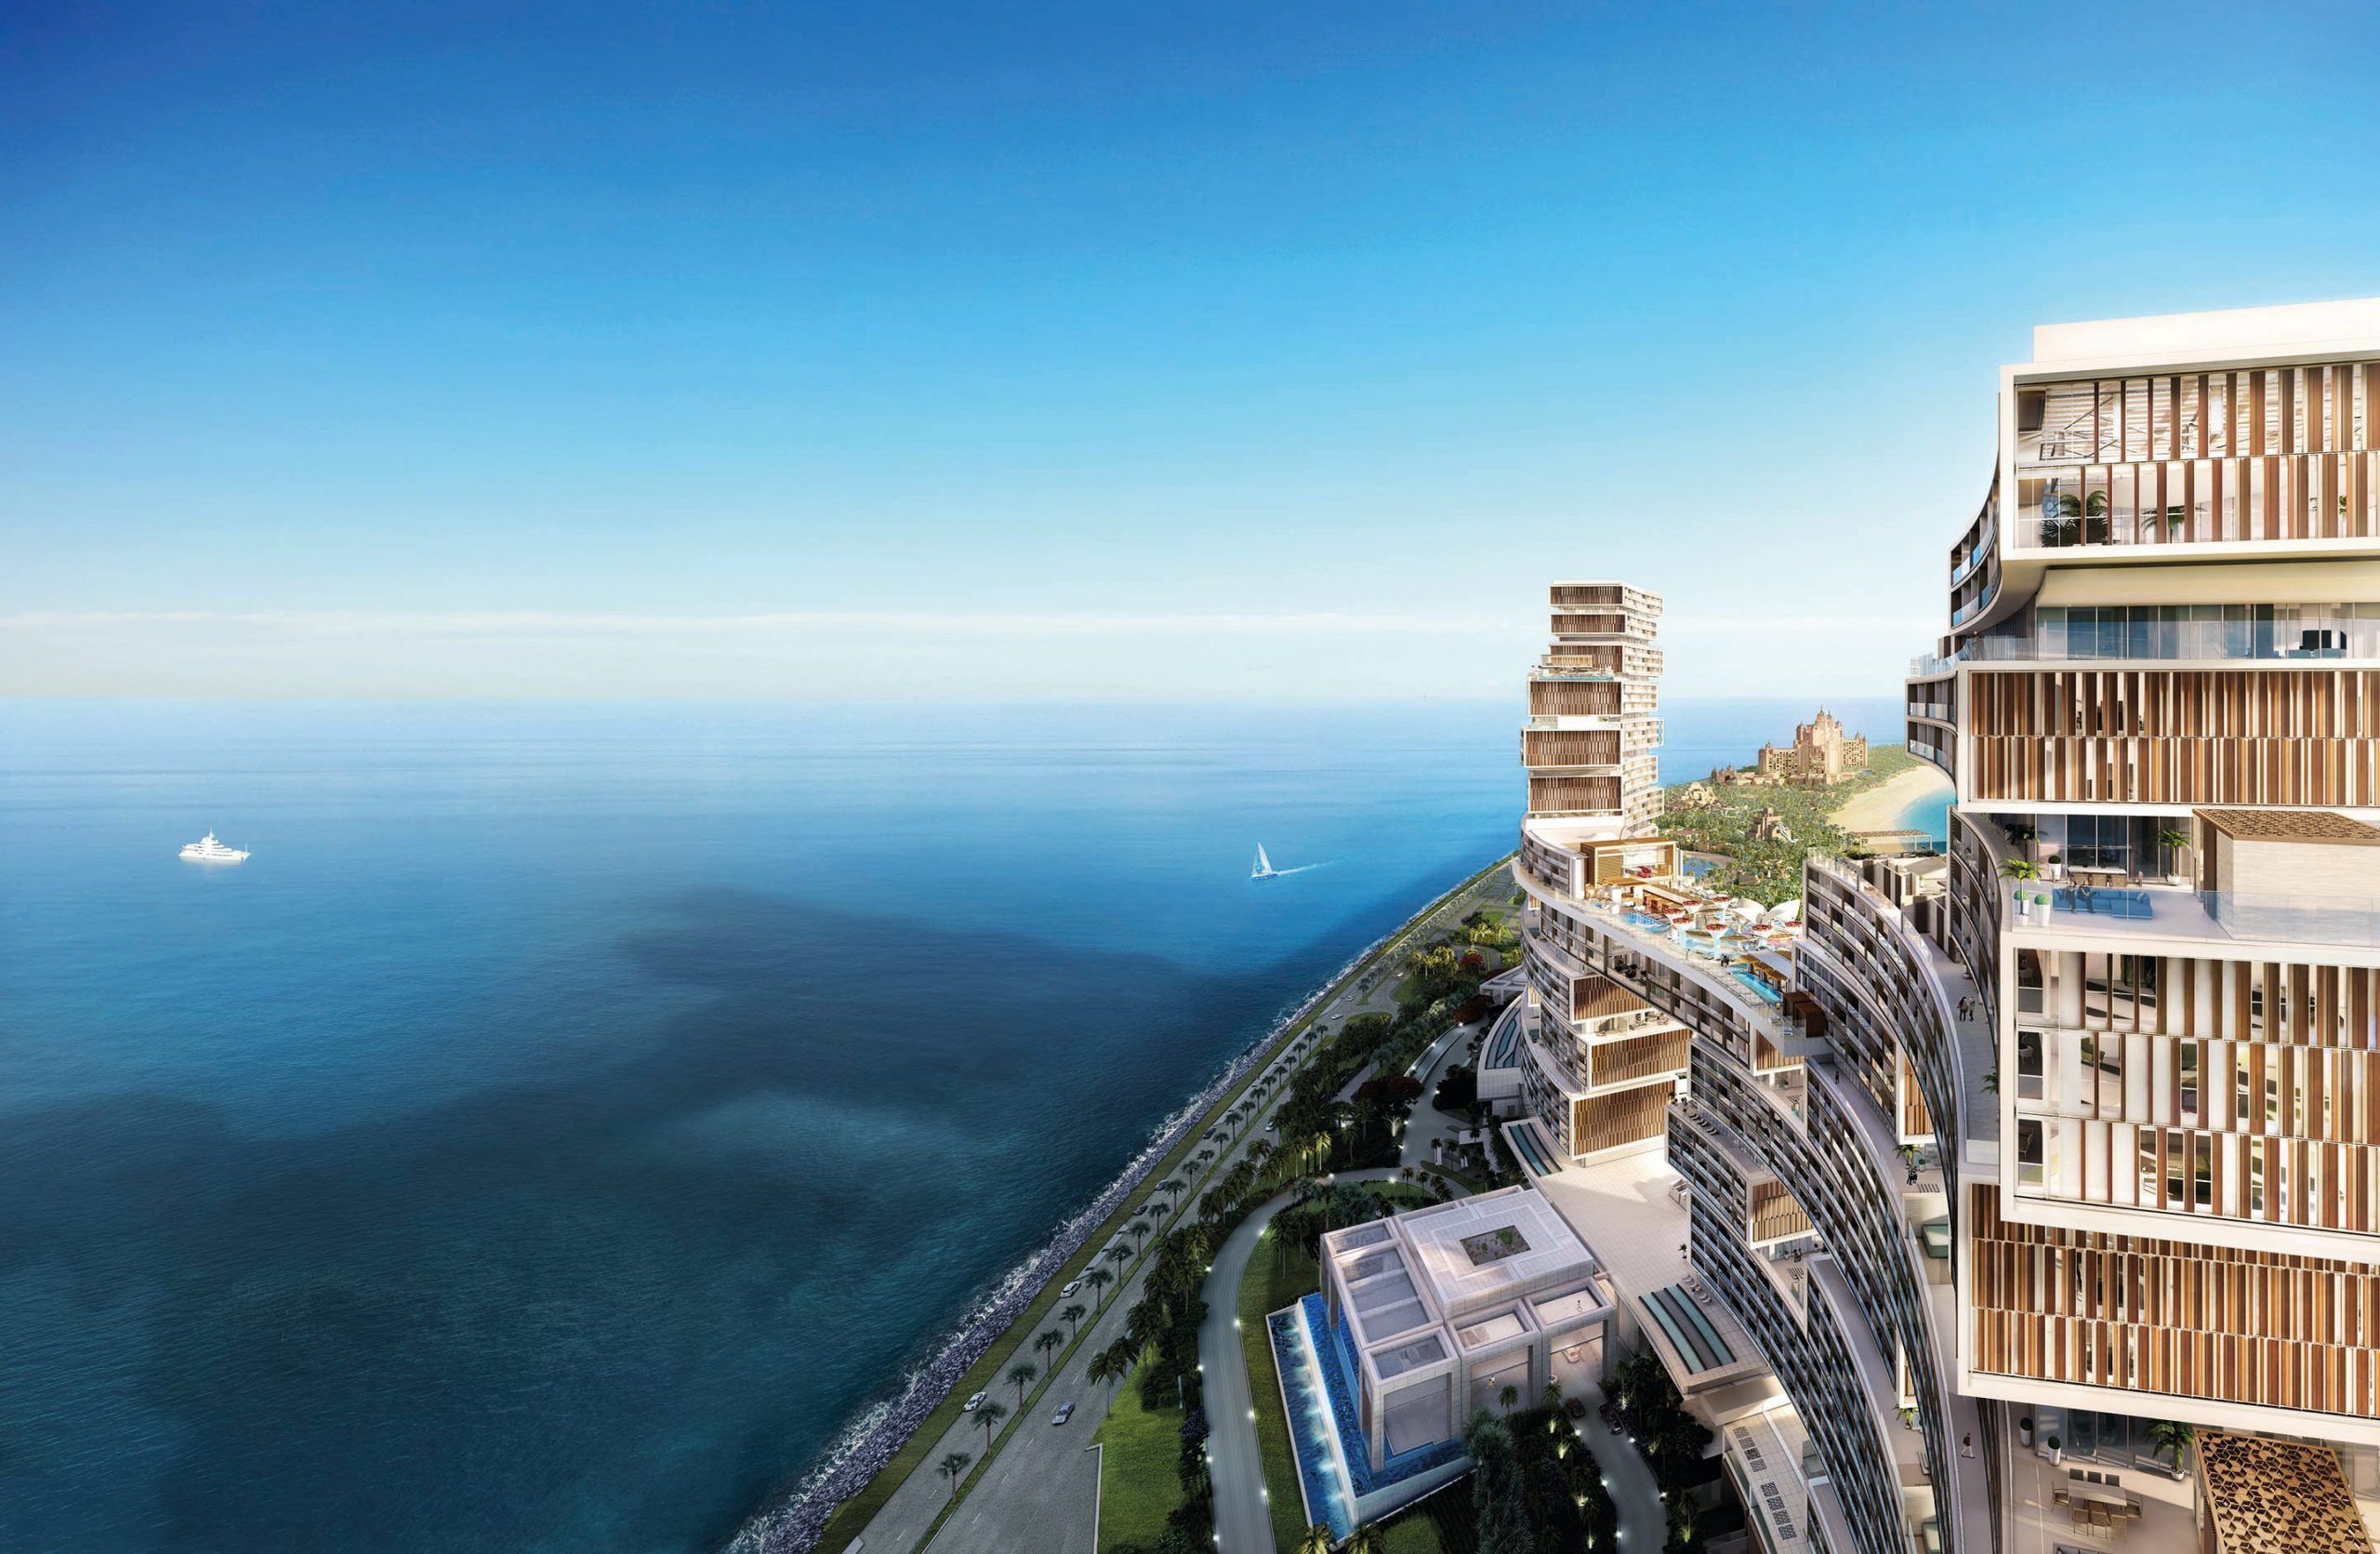 The Royal Atlantis The Palm Dubai Residences - Limitless Valley - Real Estate - Dubai